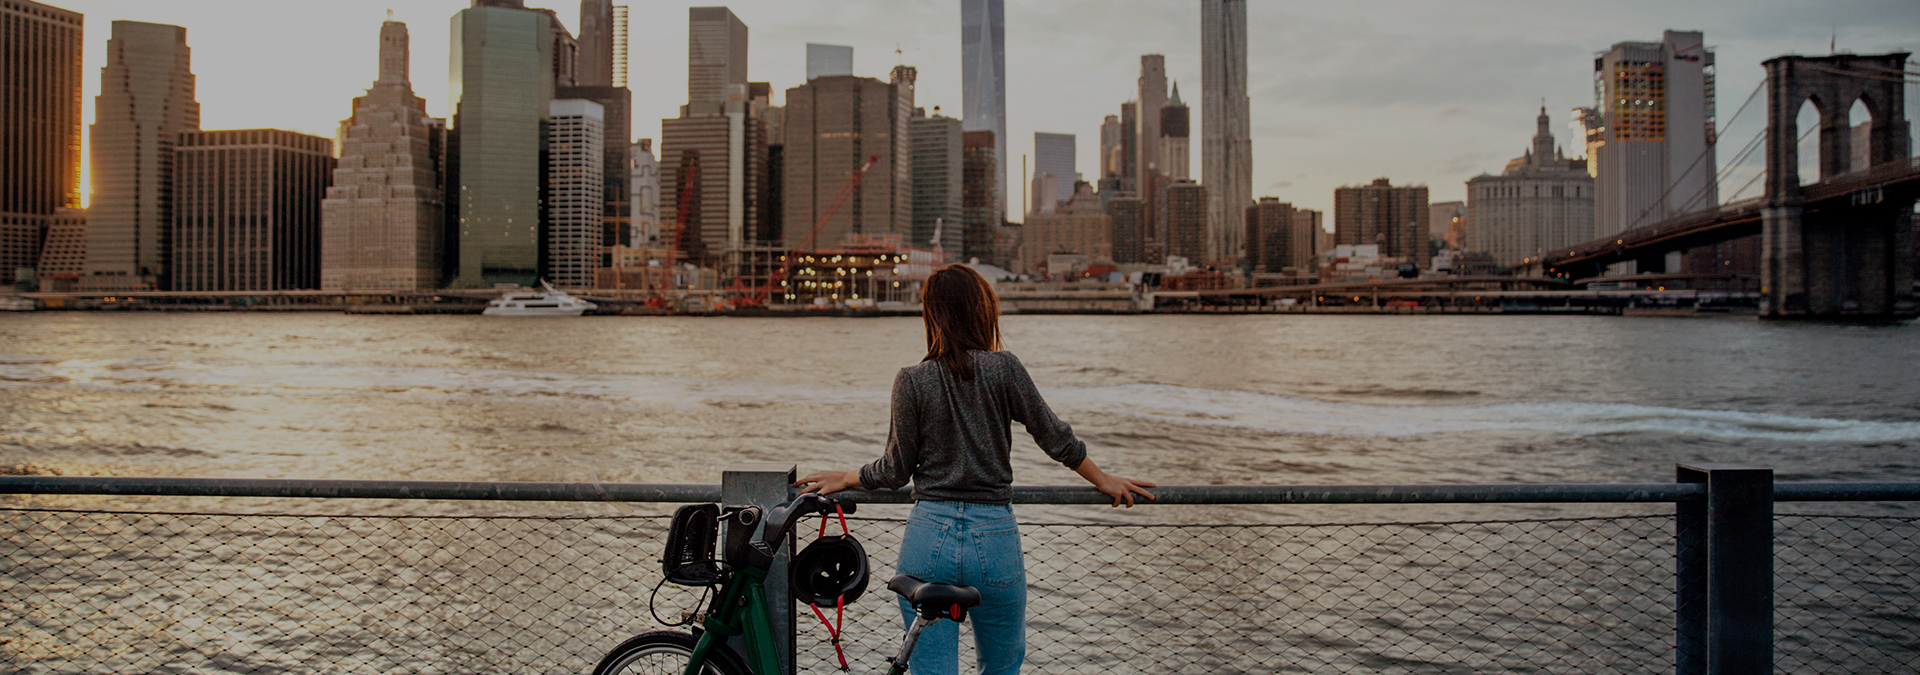 NYC-skyline-woman-with-bicycle